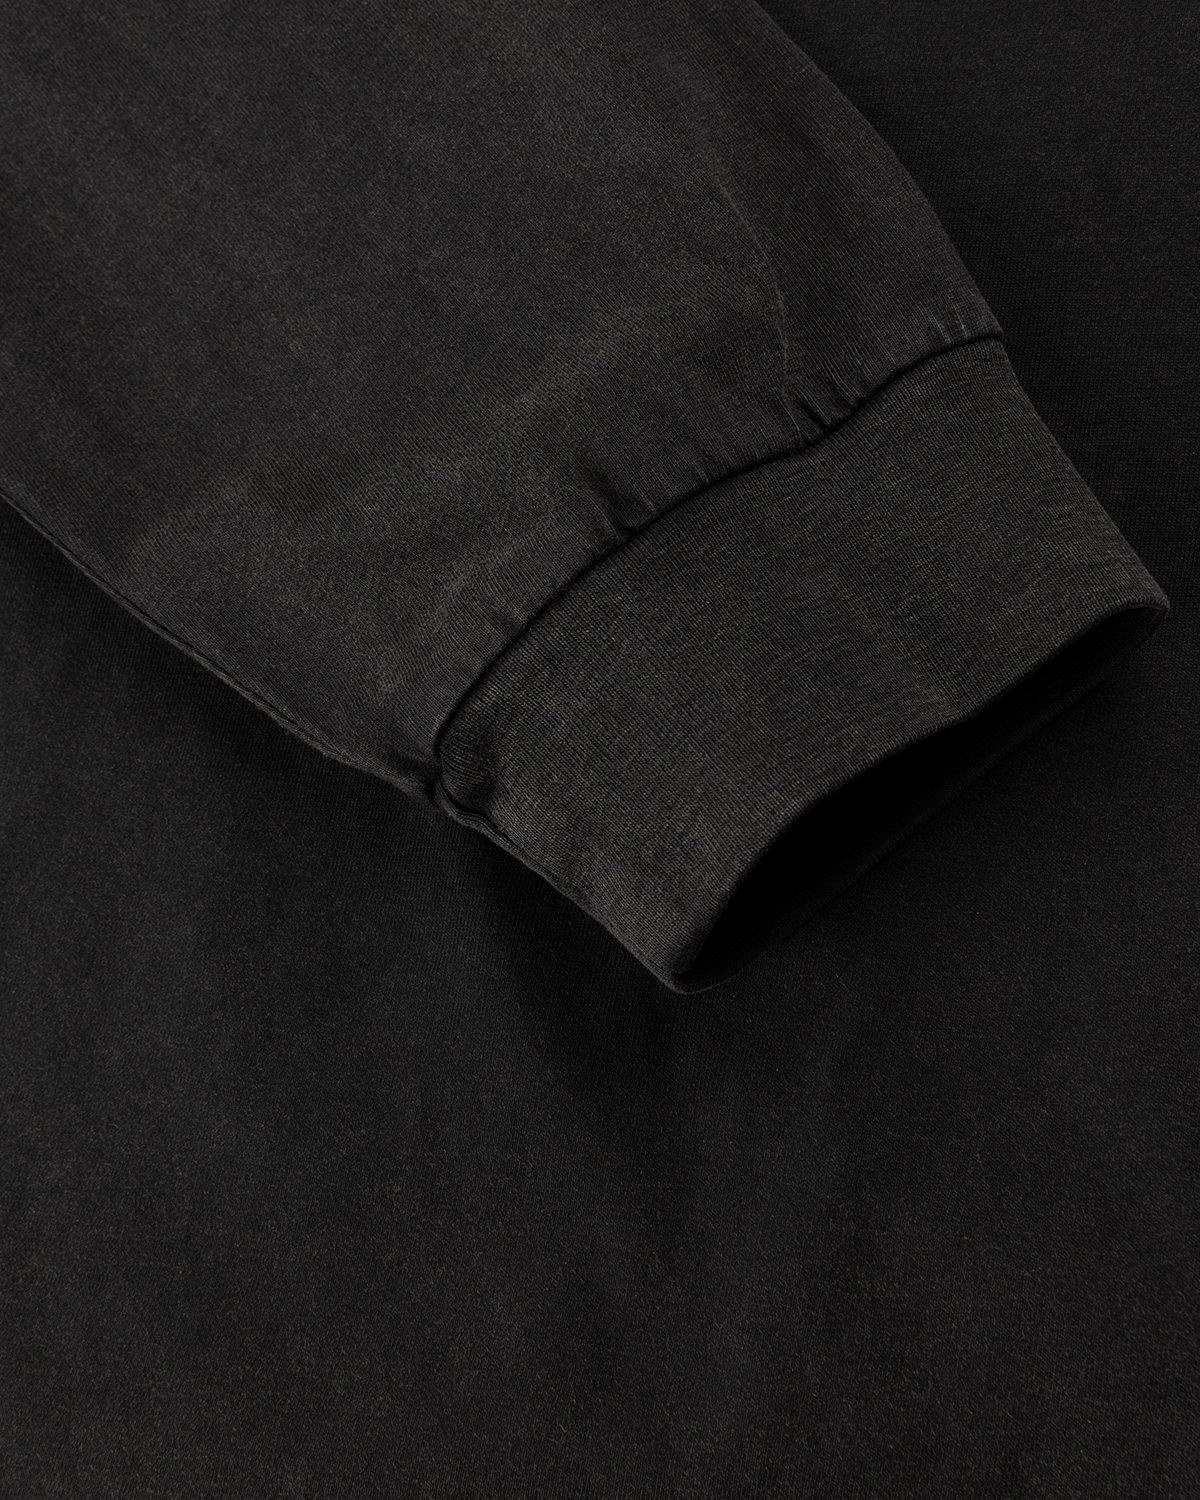 Carne Bollente - Love Her Back Longsleeve Black - Clothing - Black - Image 5